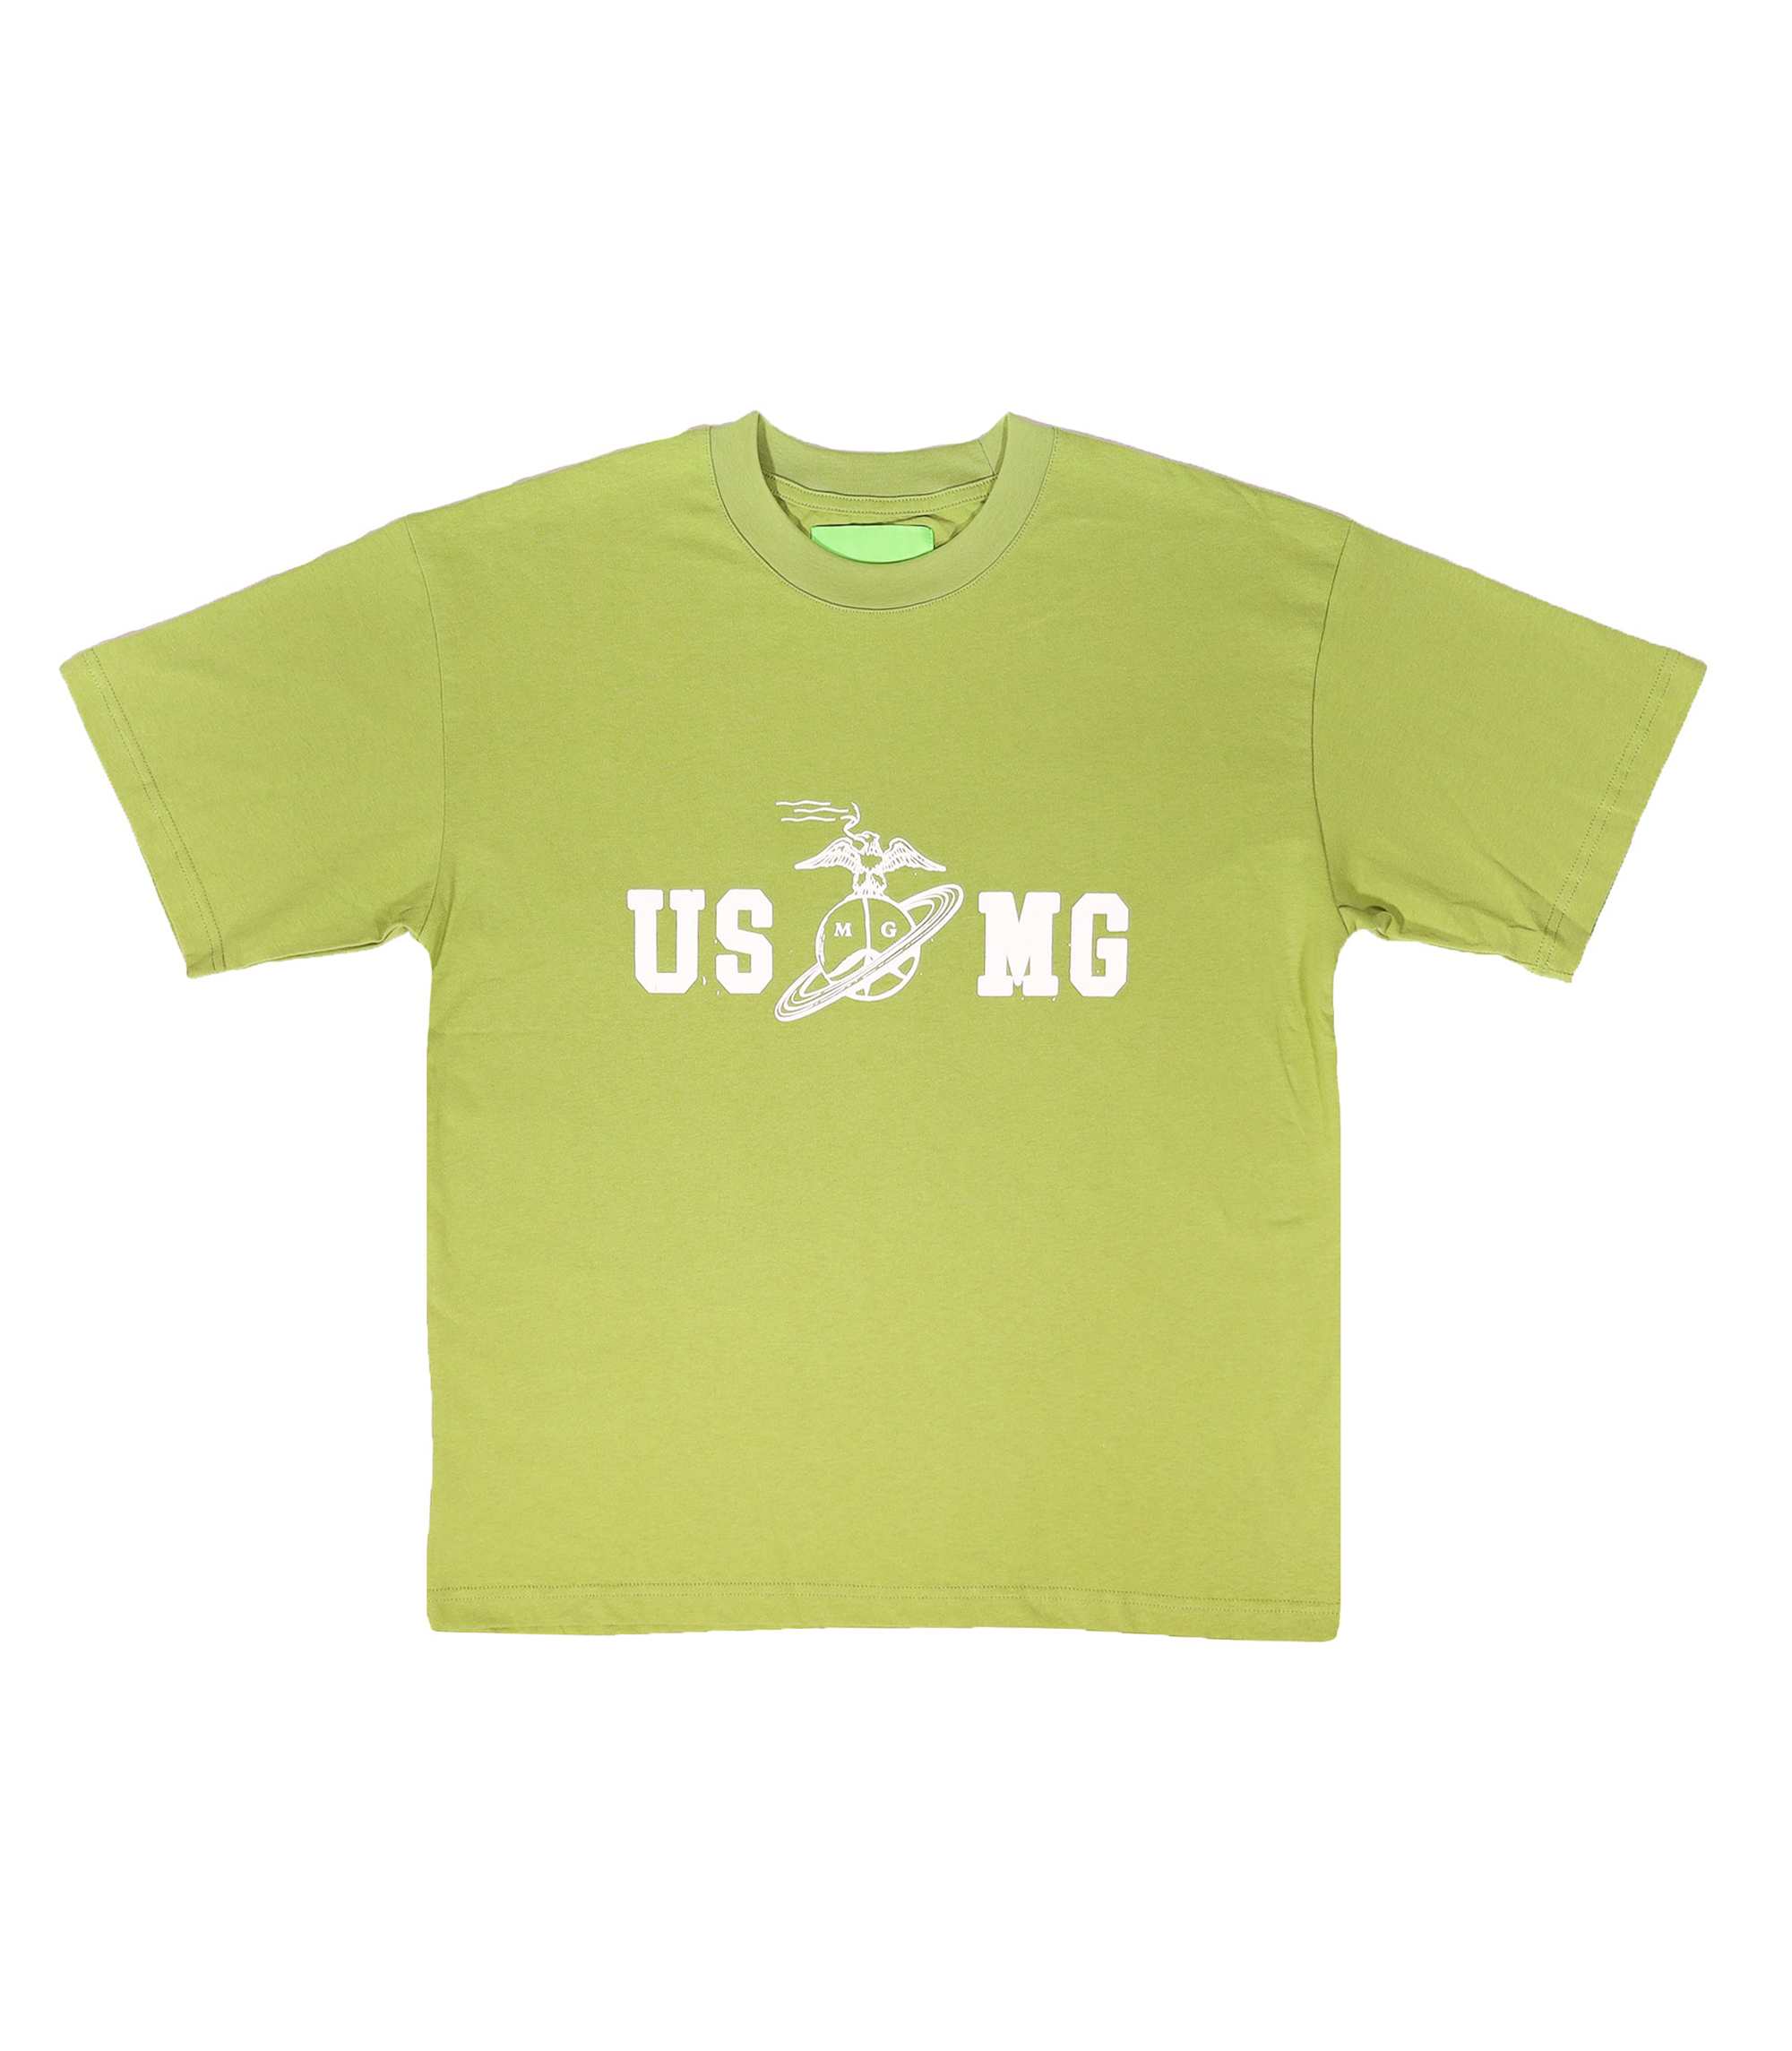 USMG T-shirt - Olive